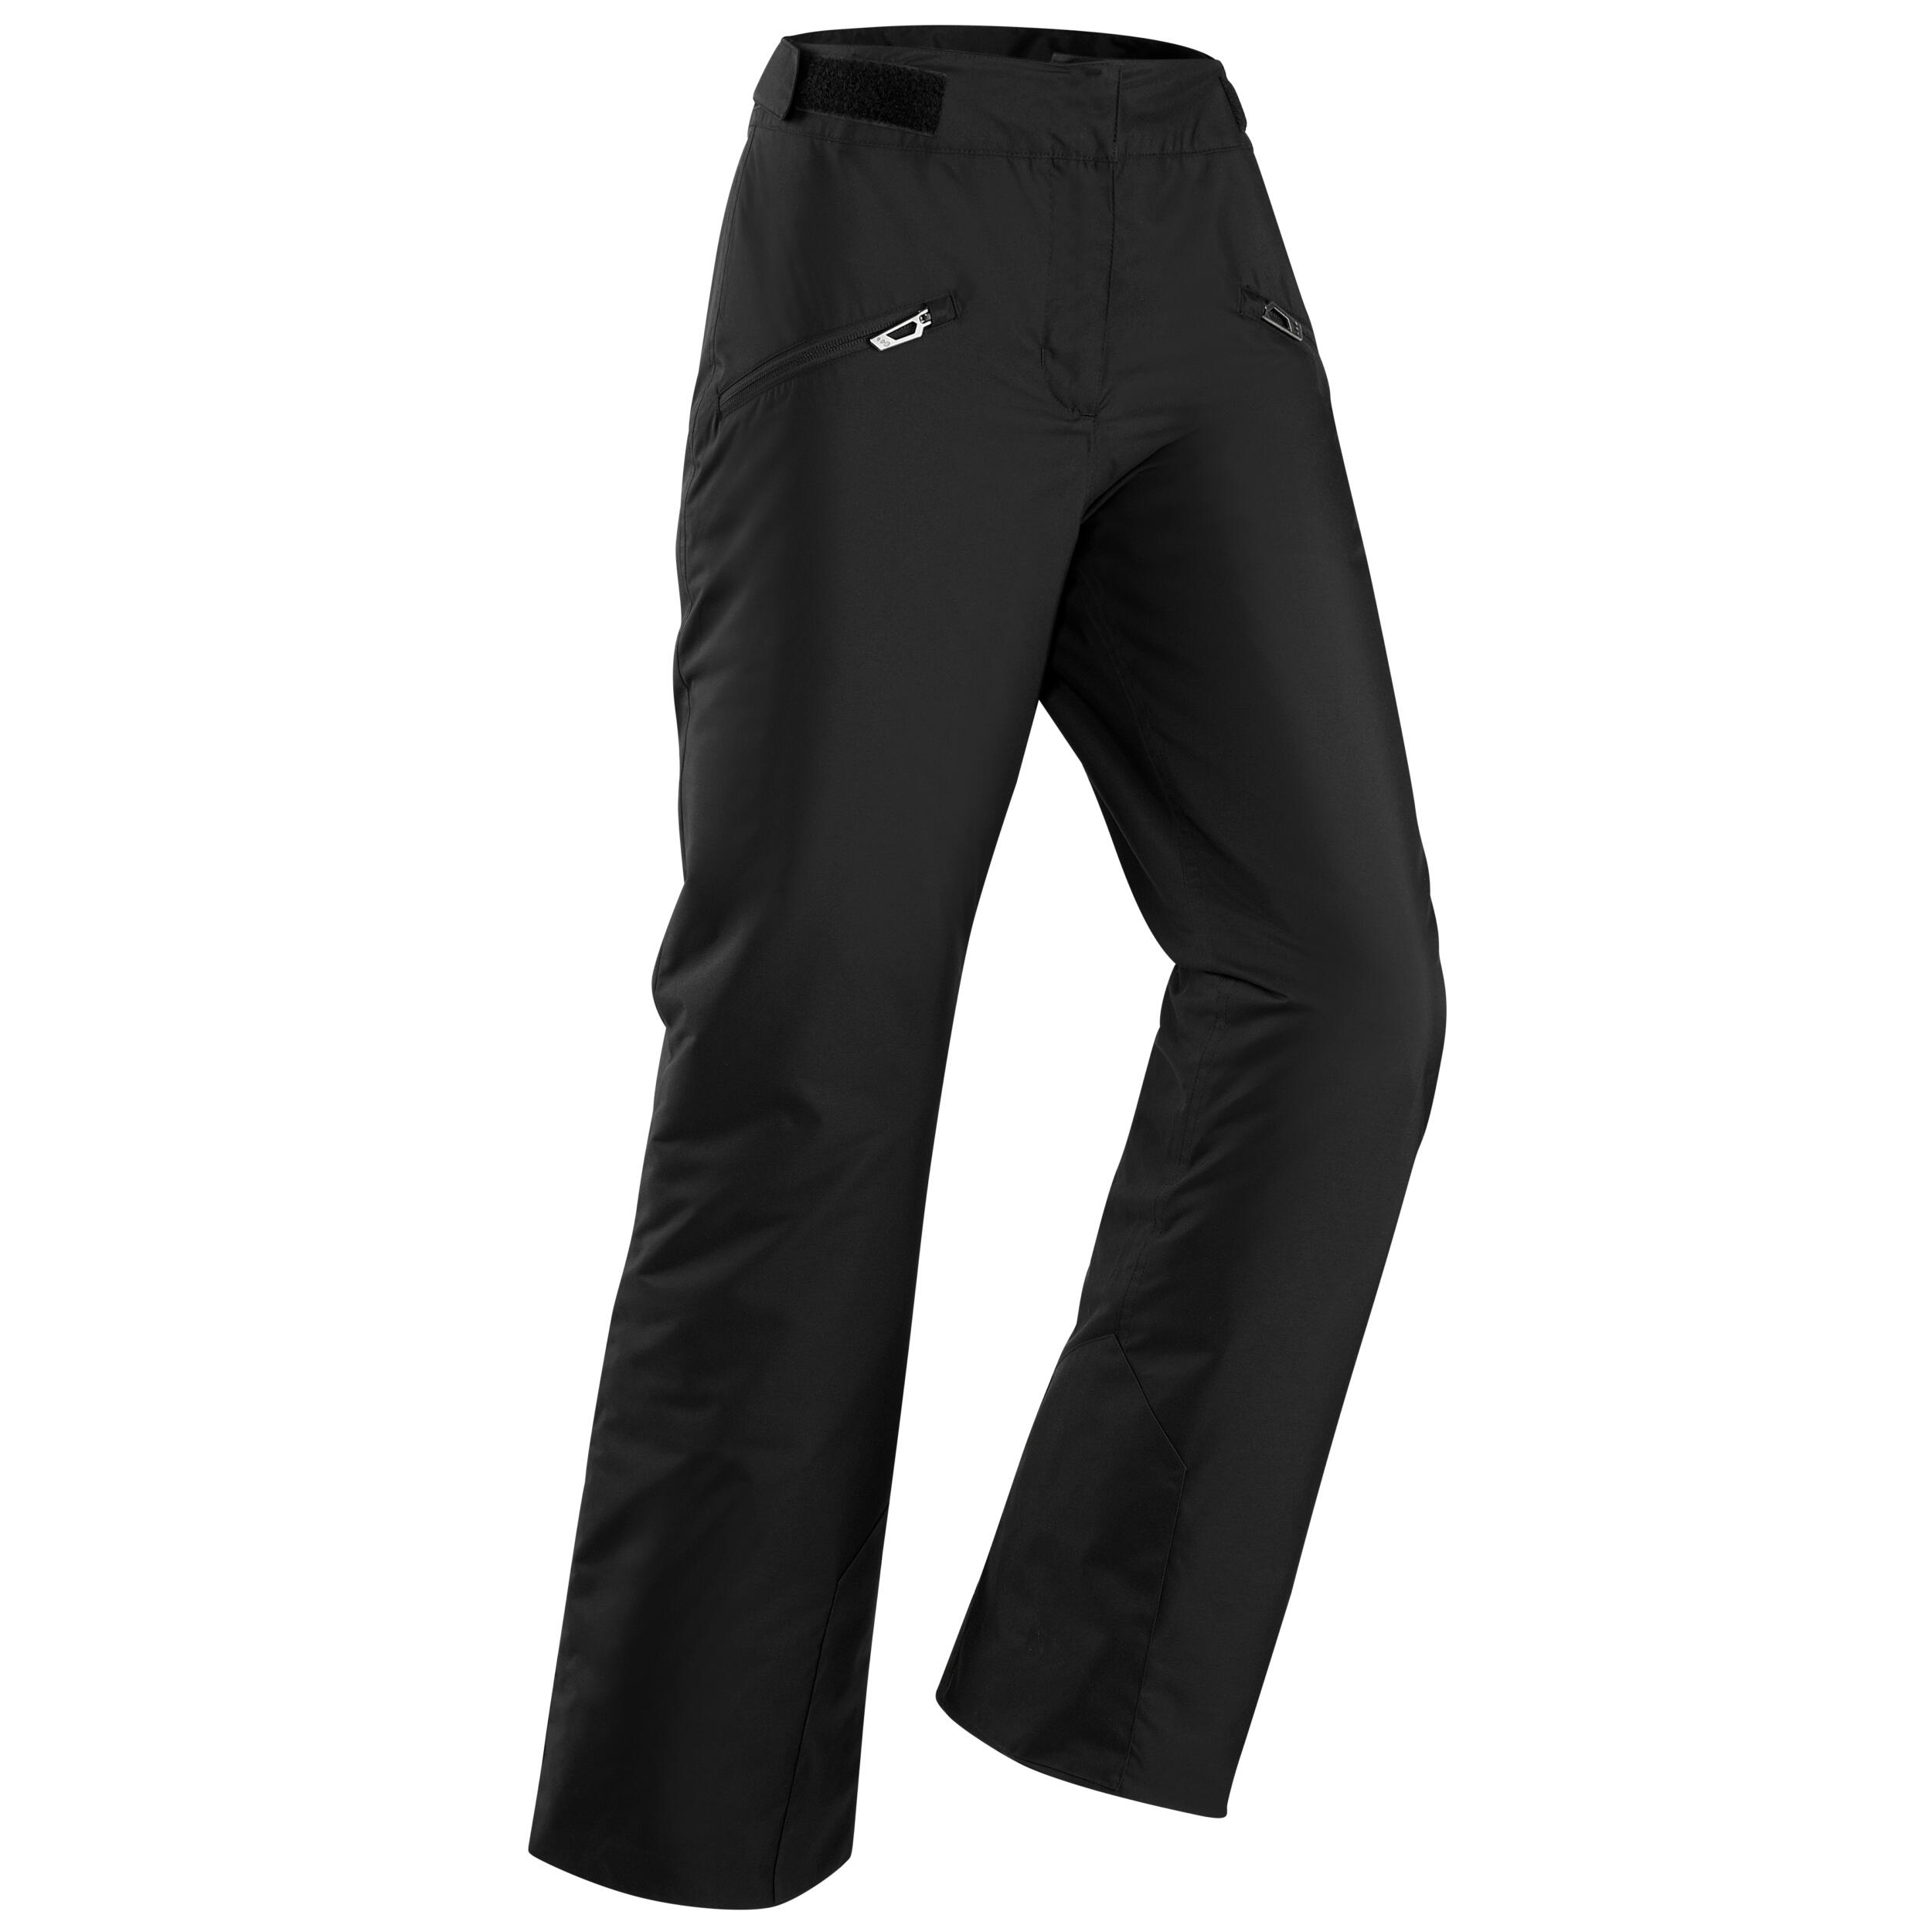 Buy Skiing Activewear Pants  Shorts Online at Columbia Sportswear